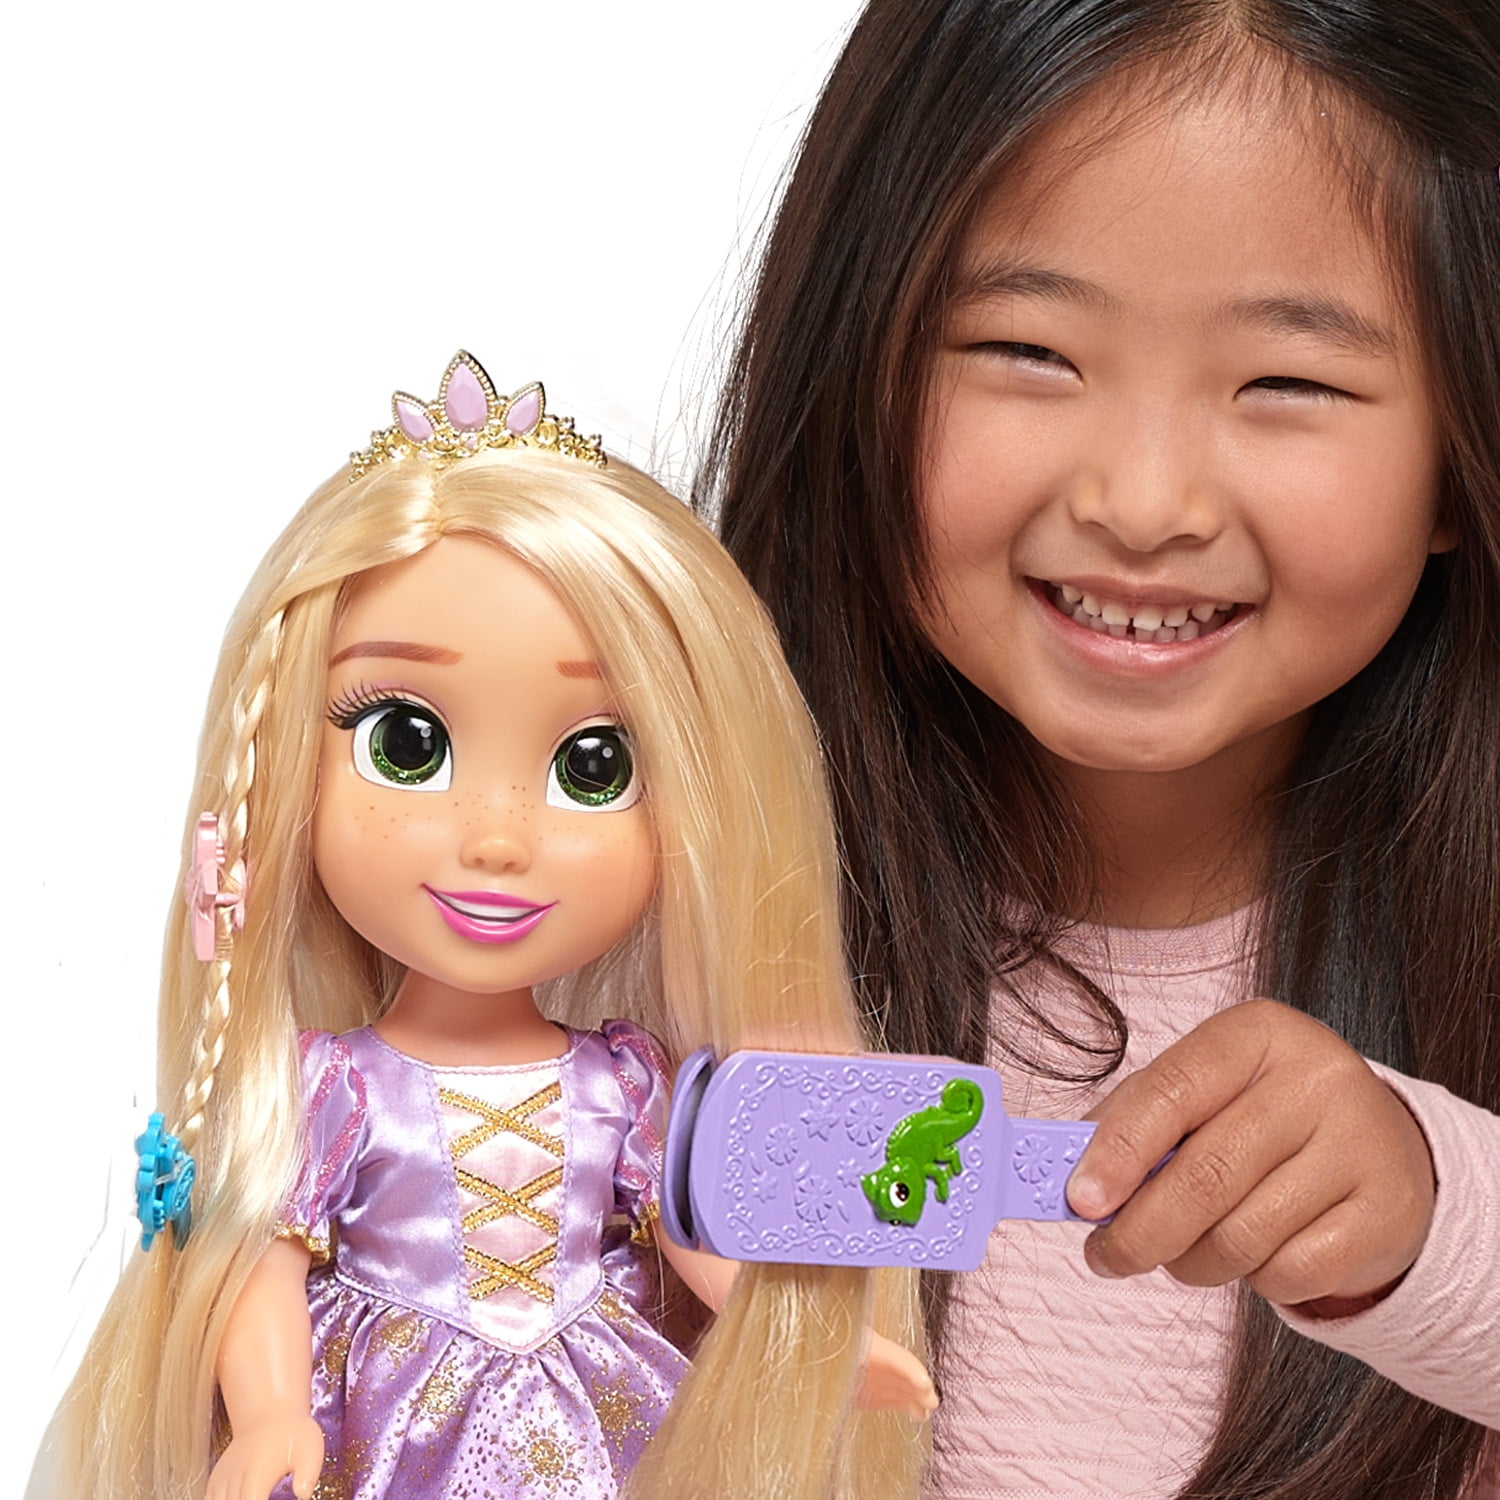 Disney Princess Rapunzel Doll, singing Rapunzel Doll with Glowing Hair & Music